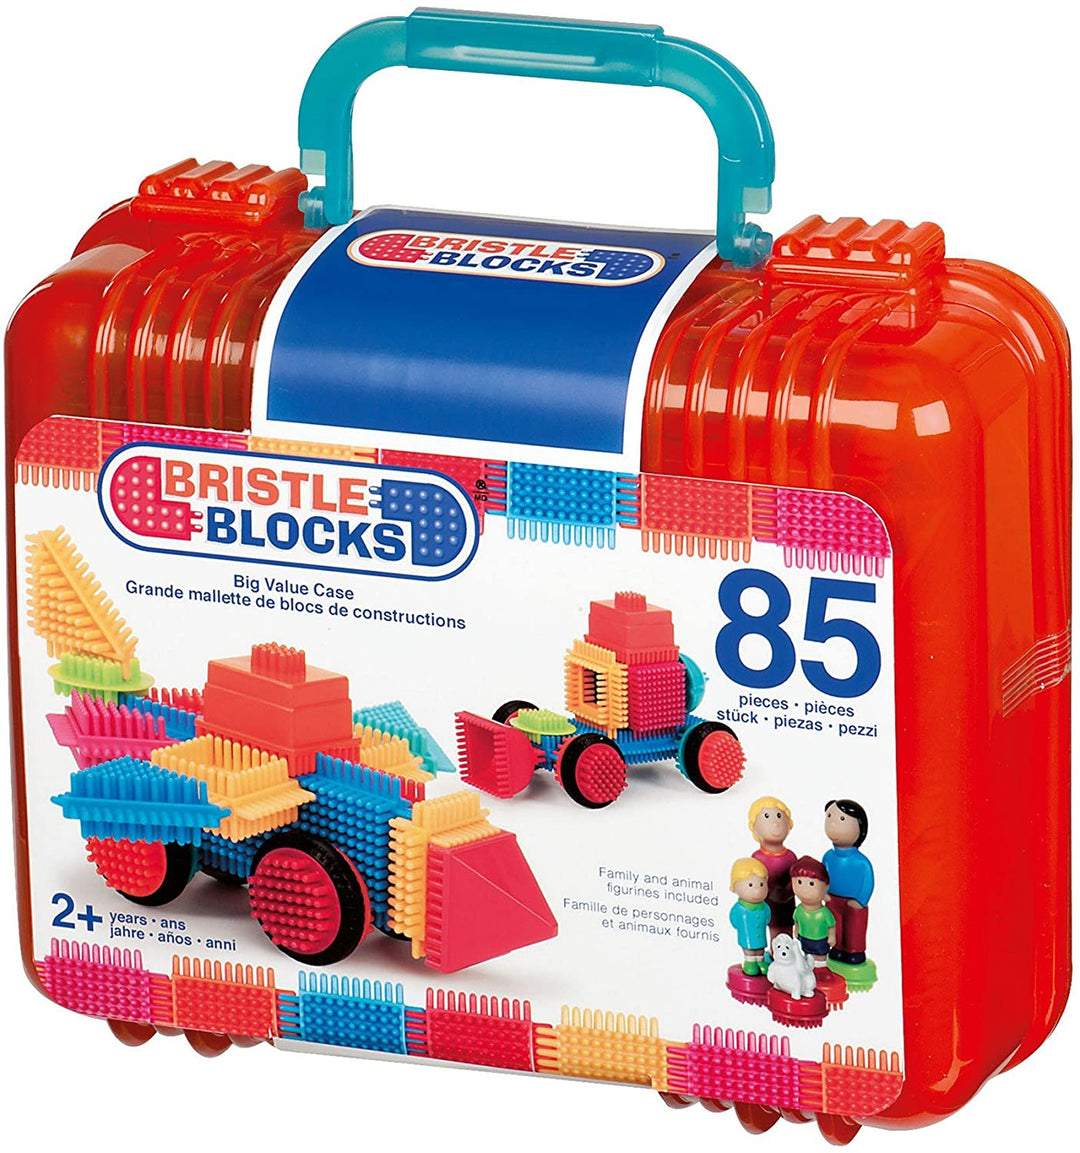 Bristle Blocks 85 Piece Big Value Case